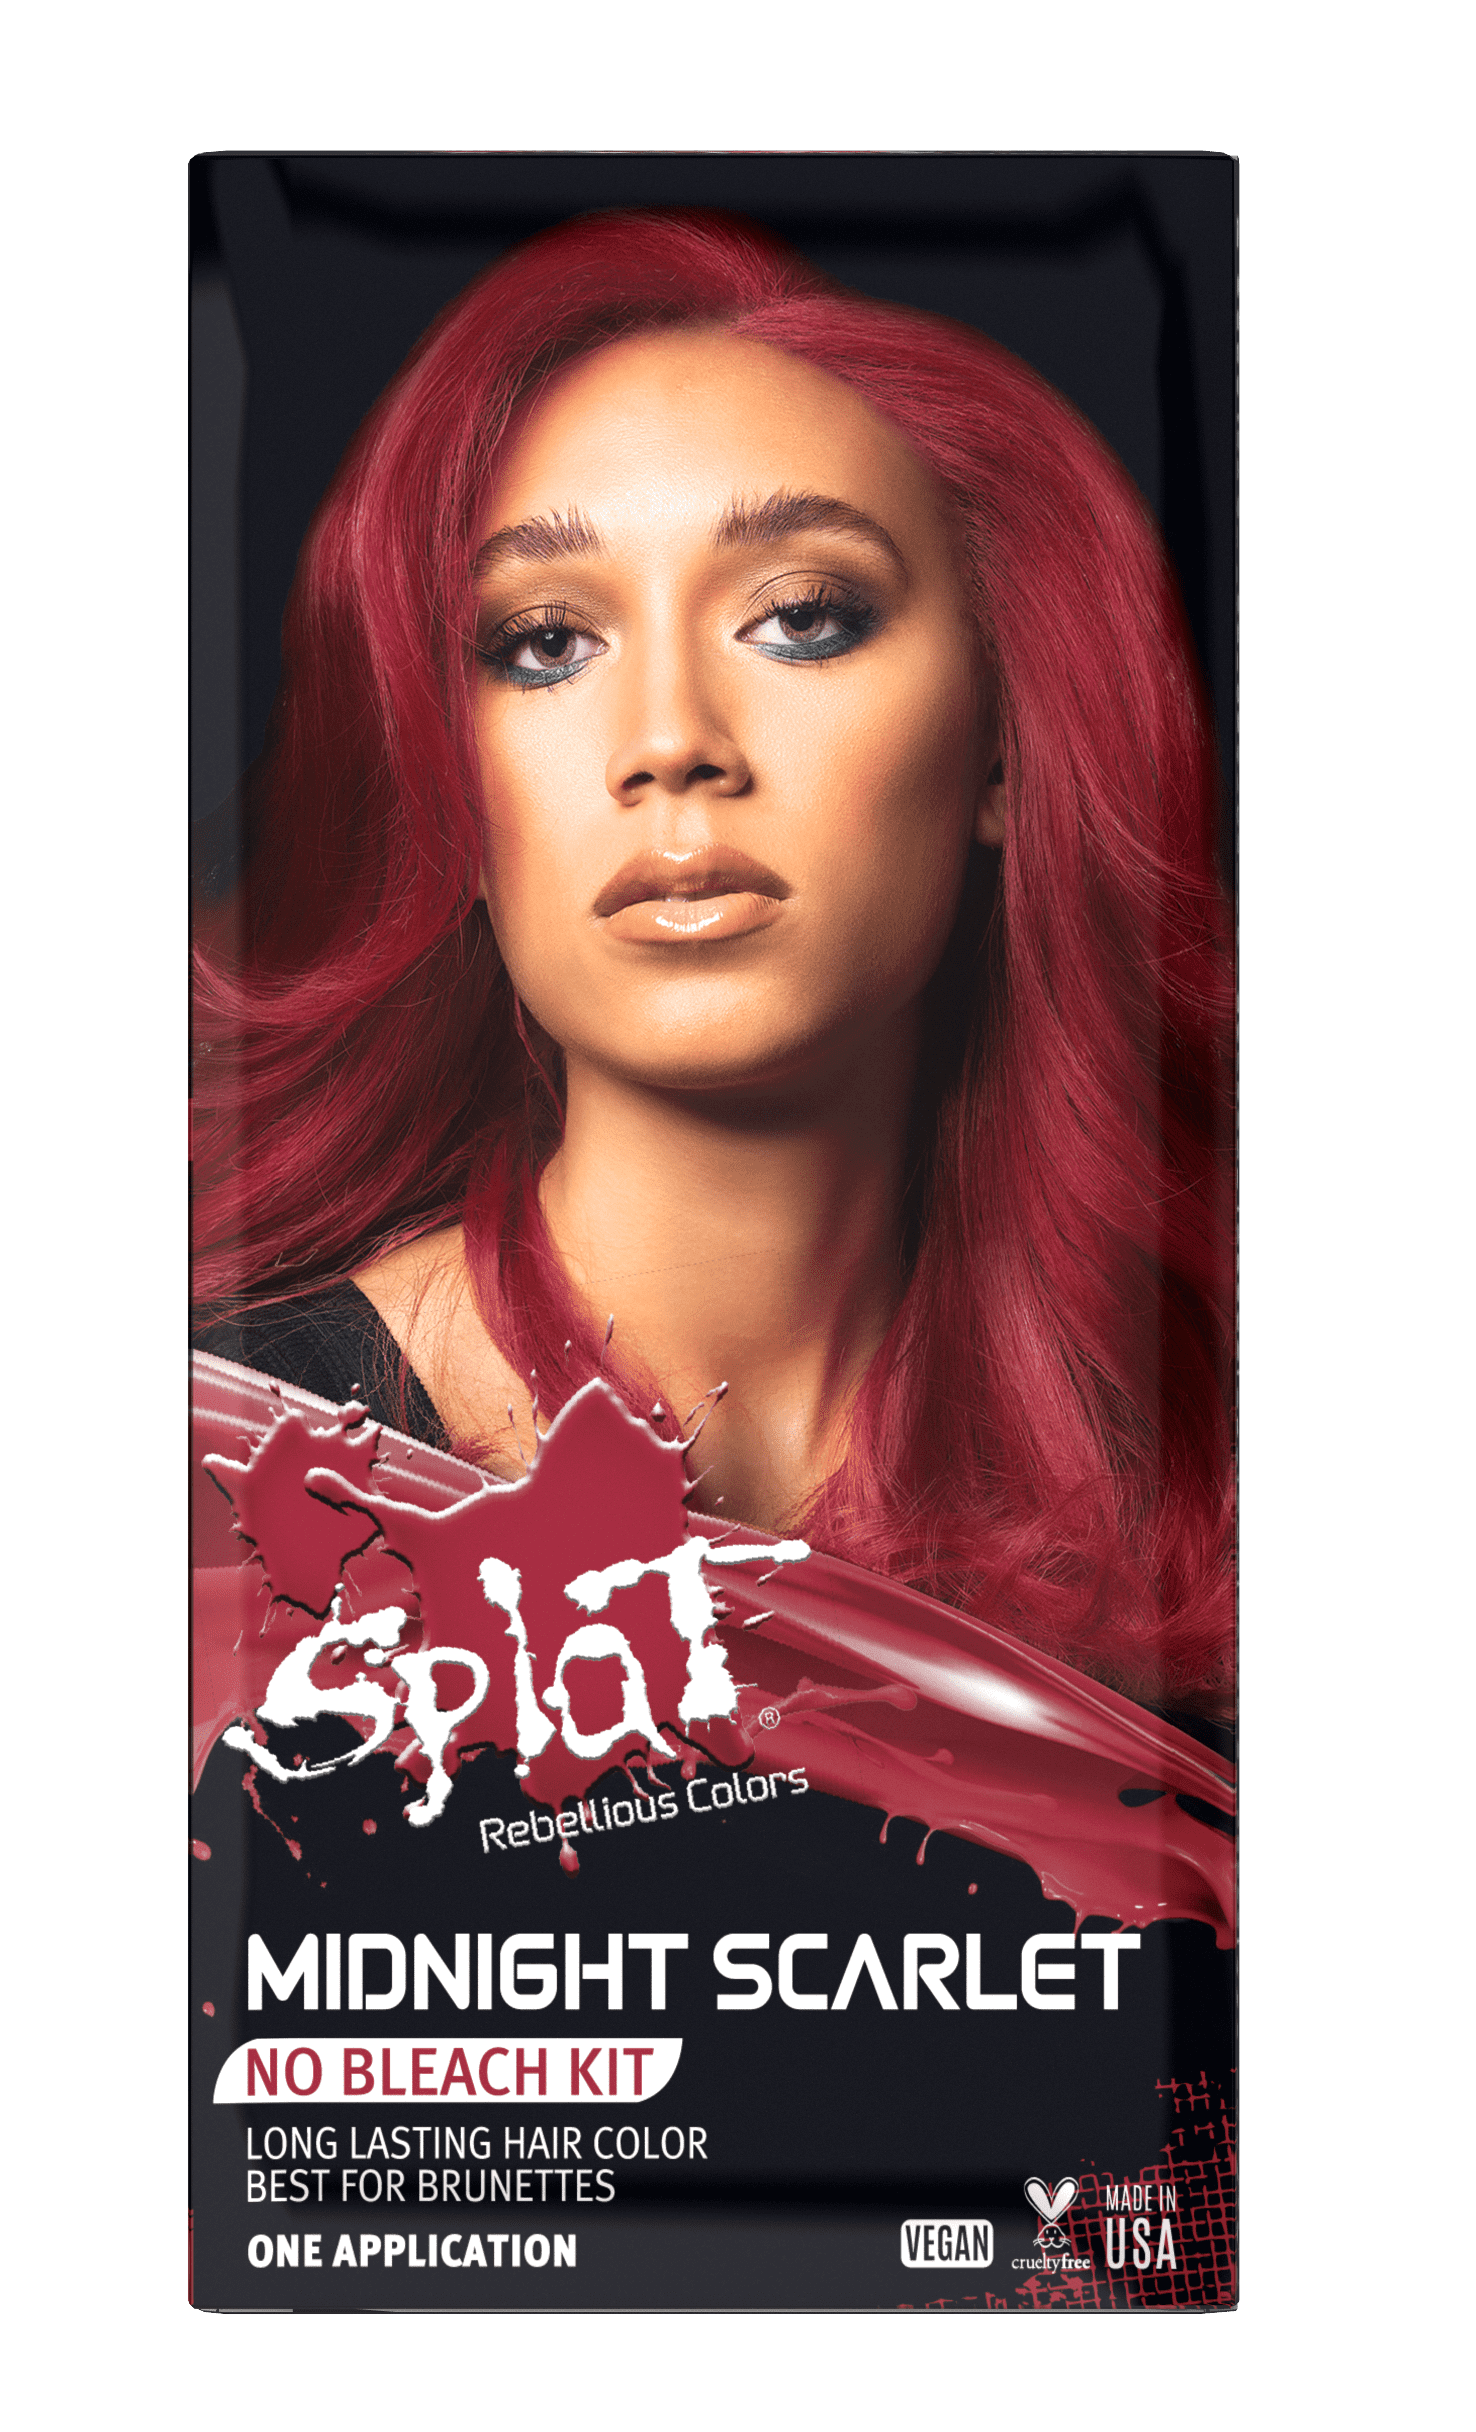 Splat Midnight Claret Dye, Semi-Permanent Red Hair Color 